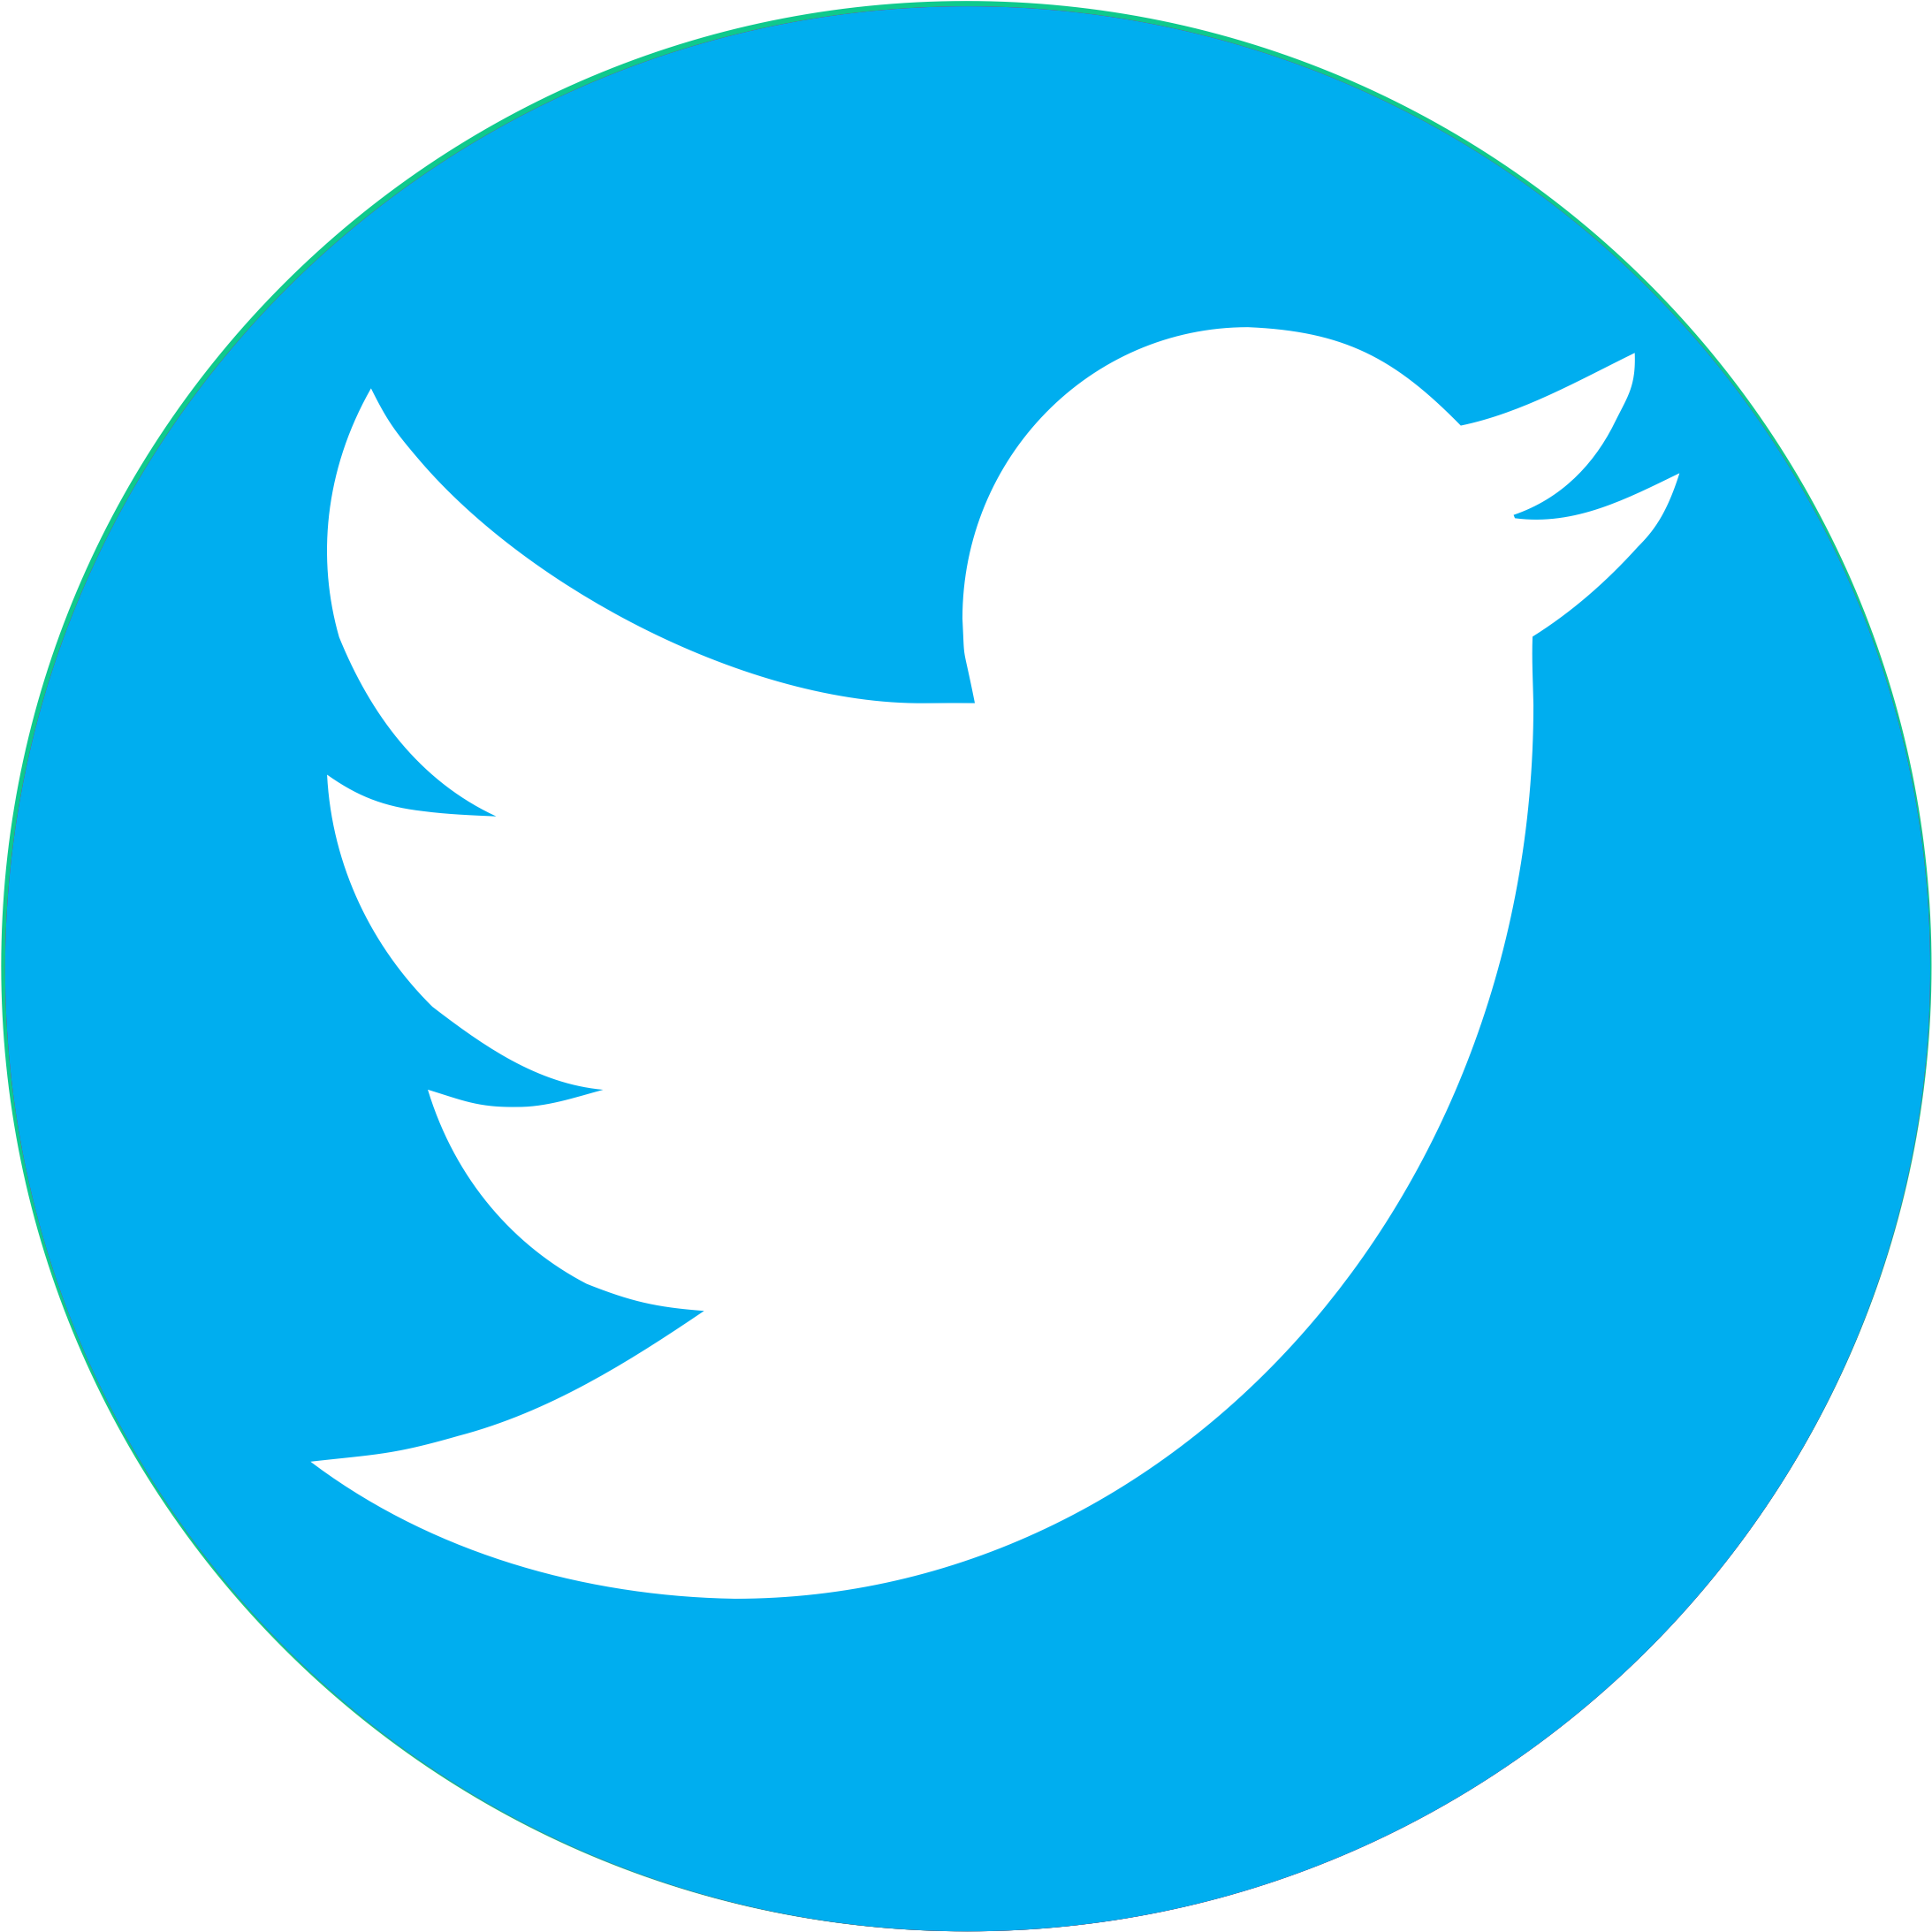 Download Twitter Logo Png Transparent Background - Logo Twitter Png PNG Image with No Background ...